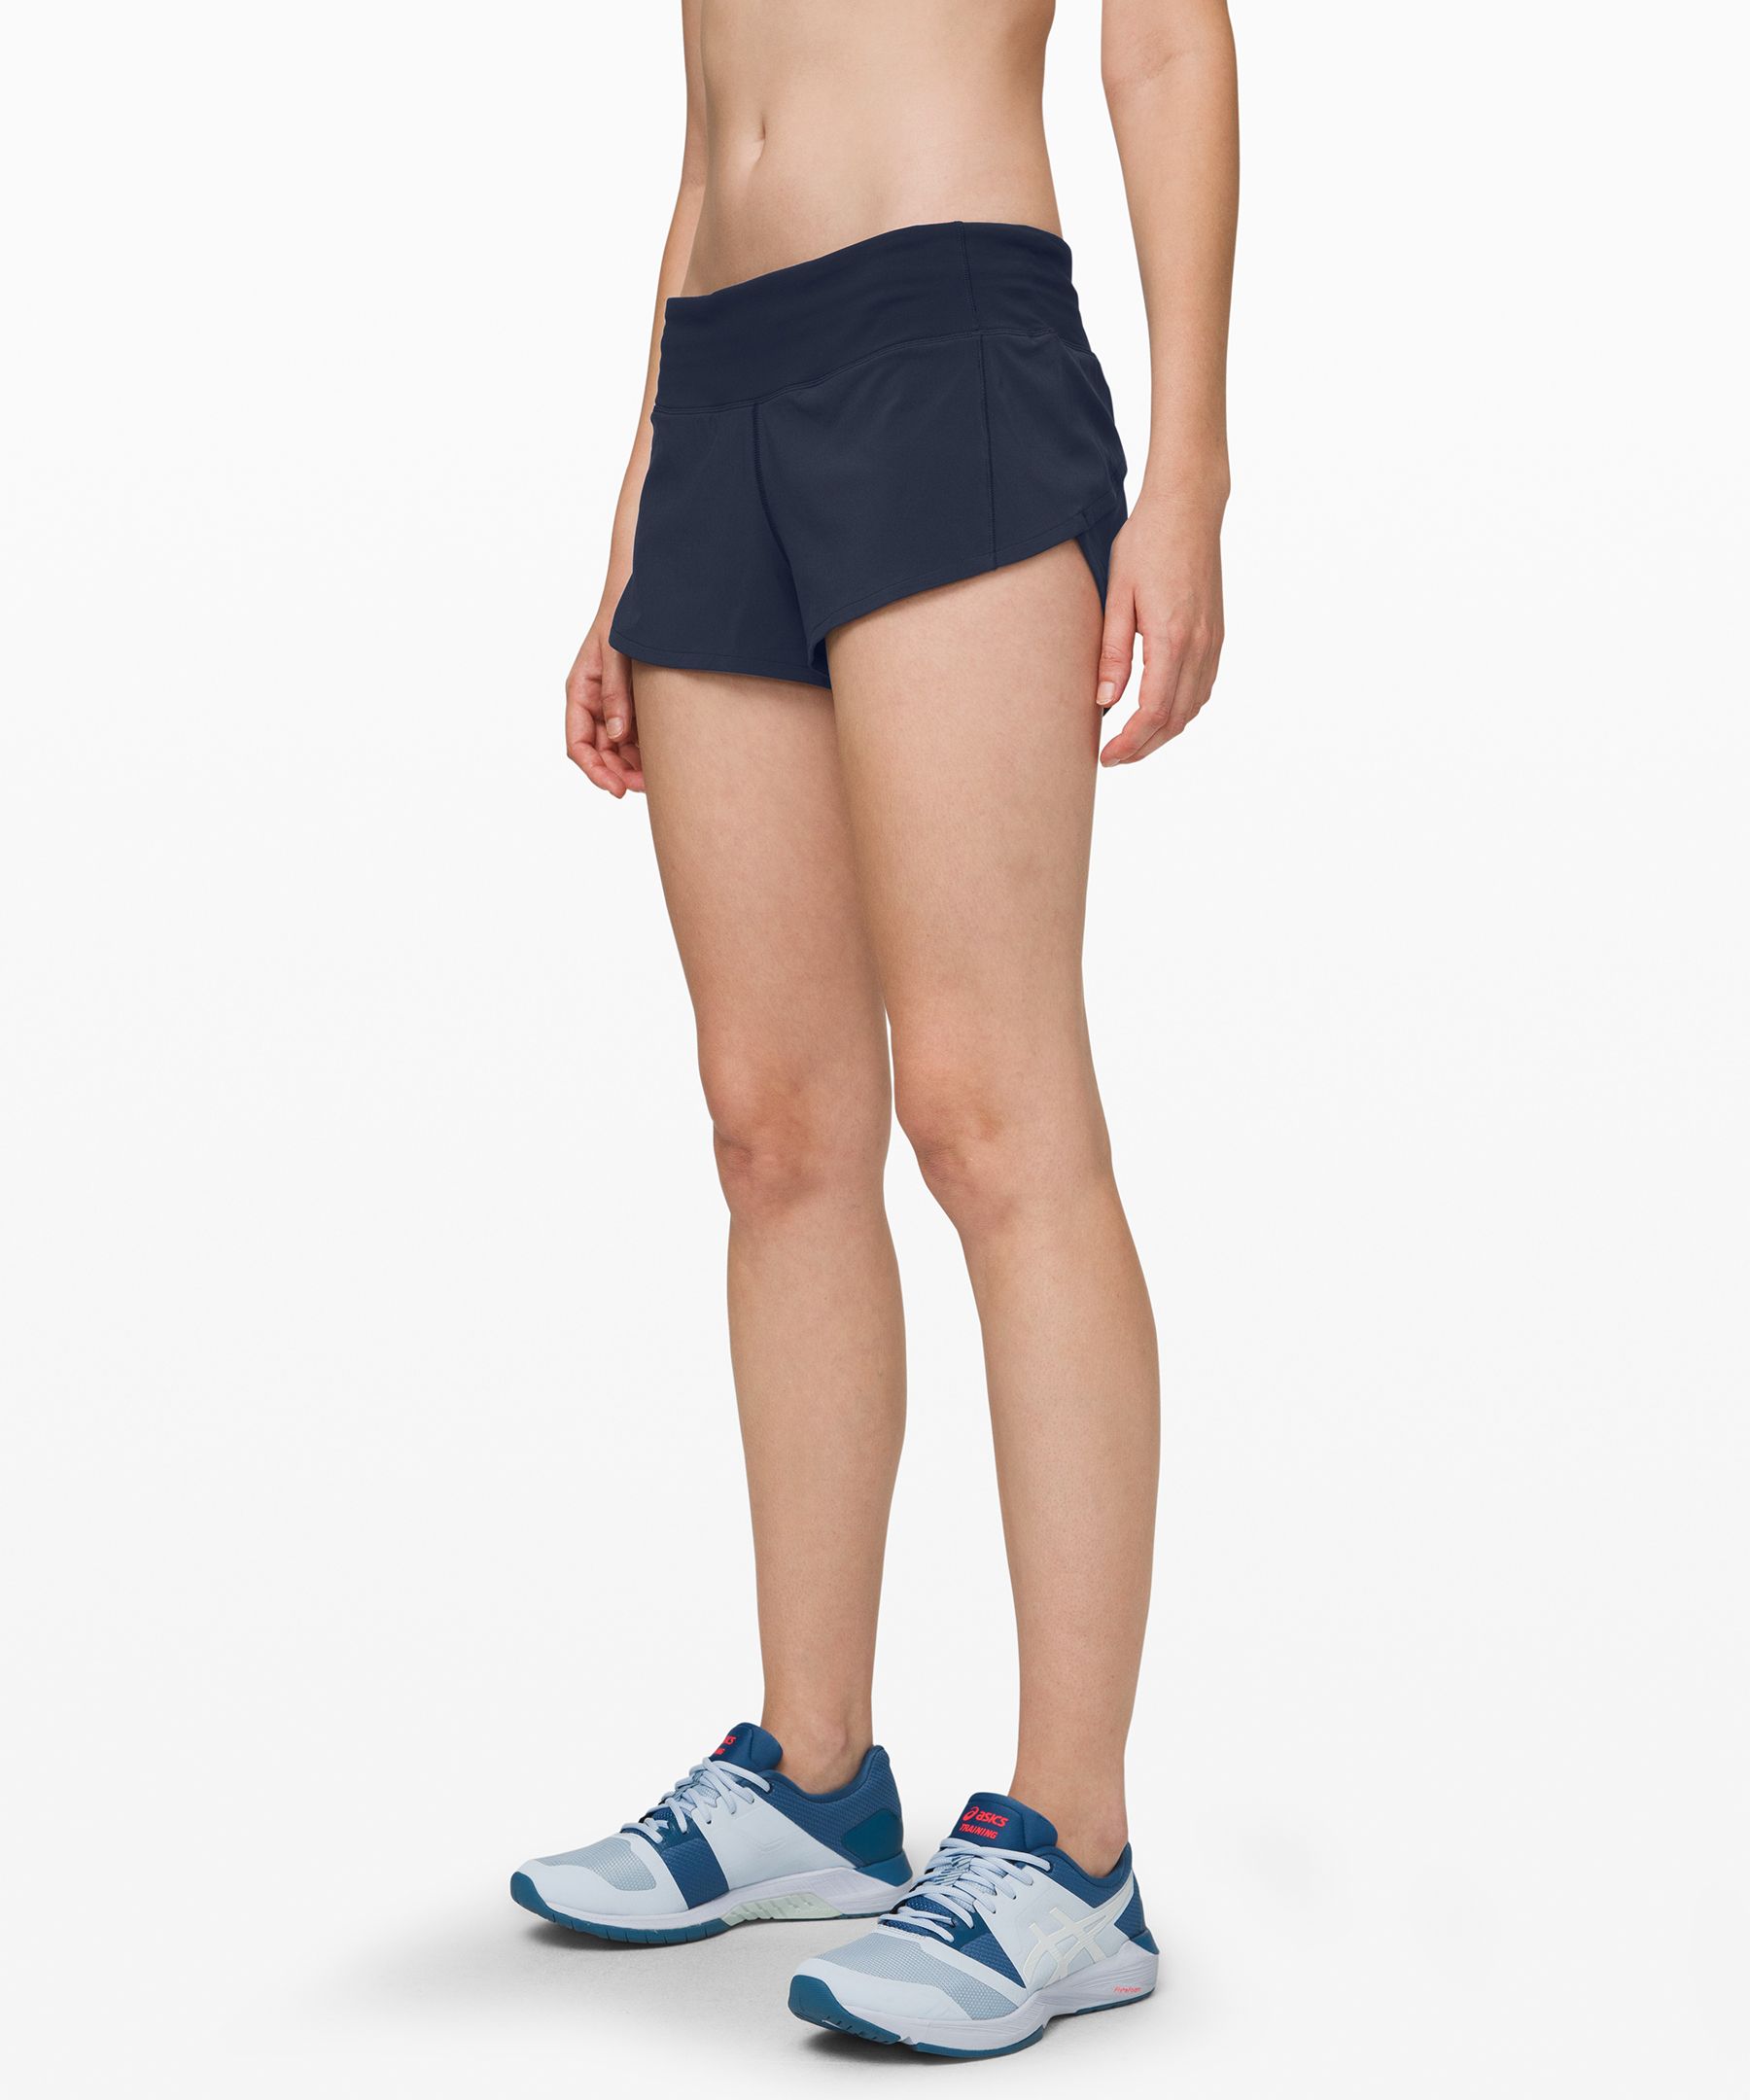 lulu shorts on sale